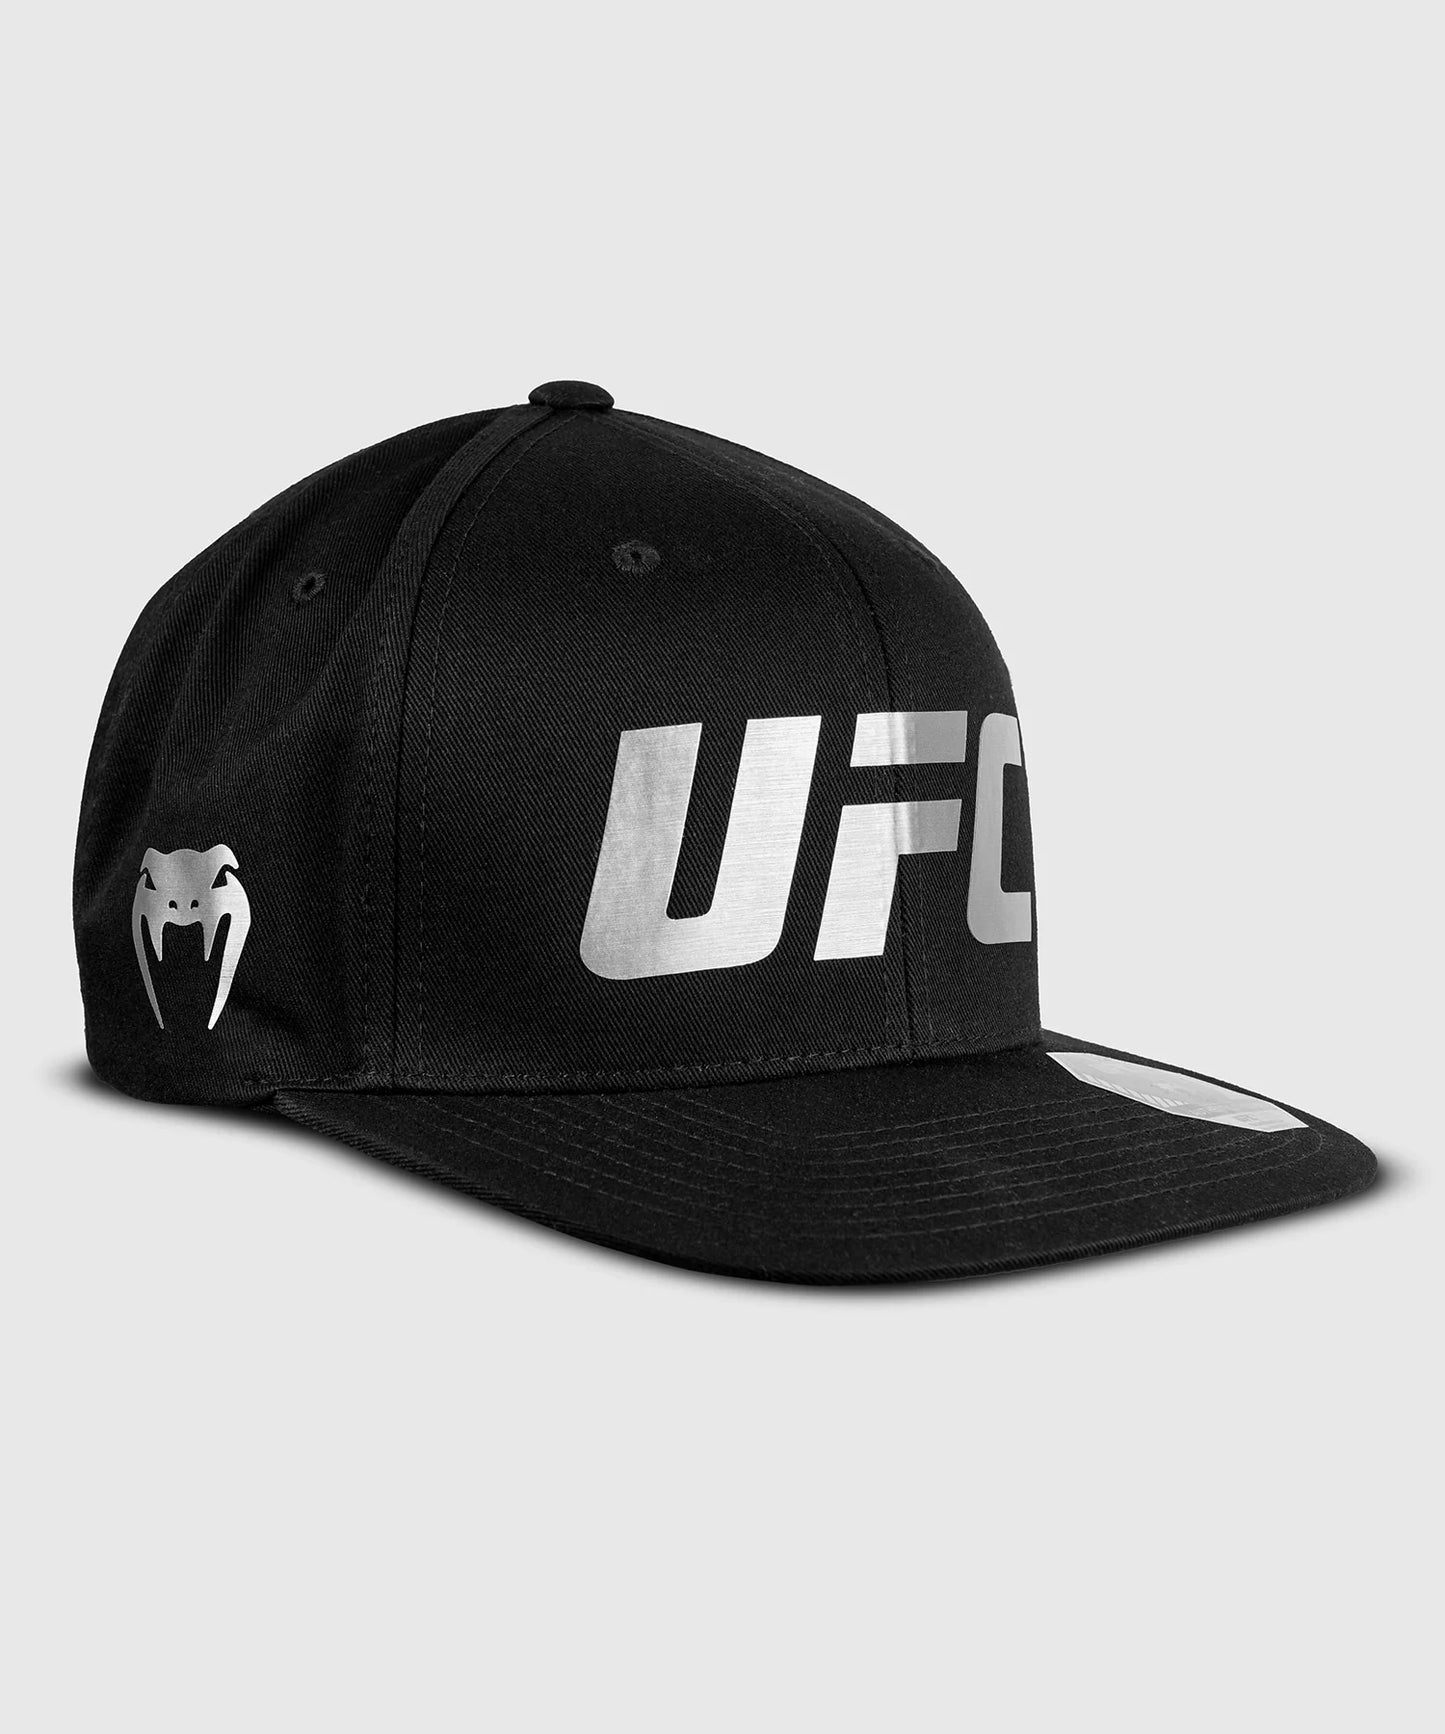 UFC ADRENALINE BY VENUM AUTHENTIC FIGHT NIGHT BASEBALL HAT - BLACK